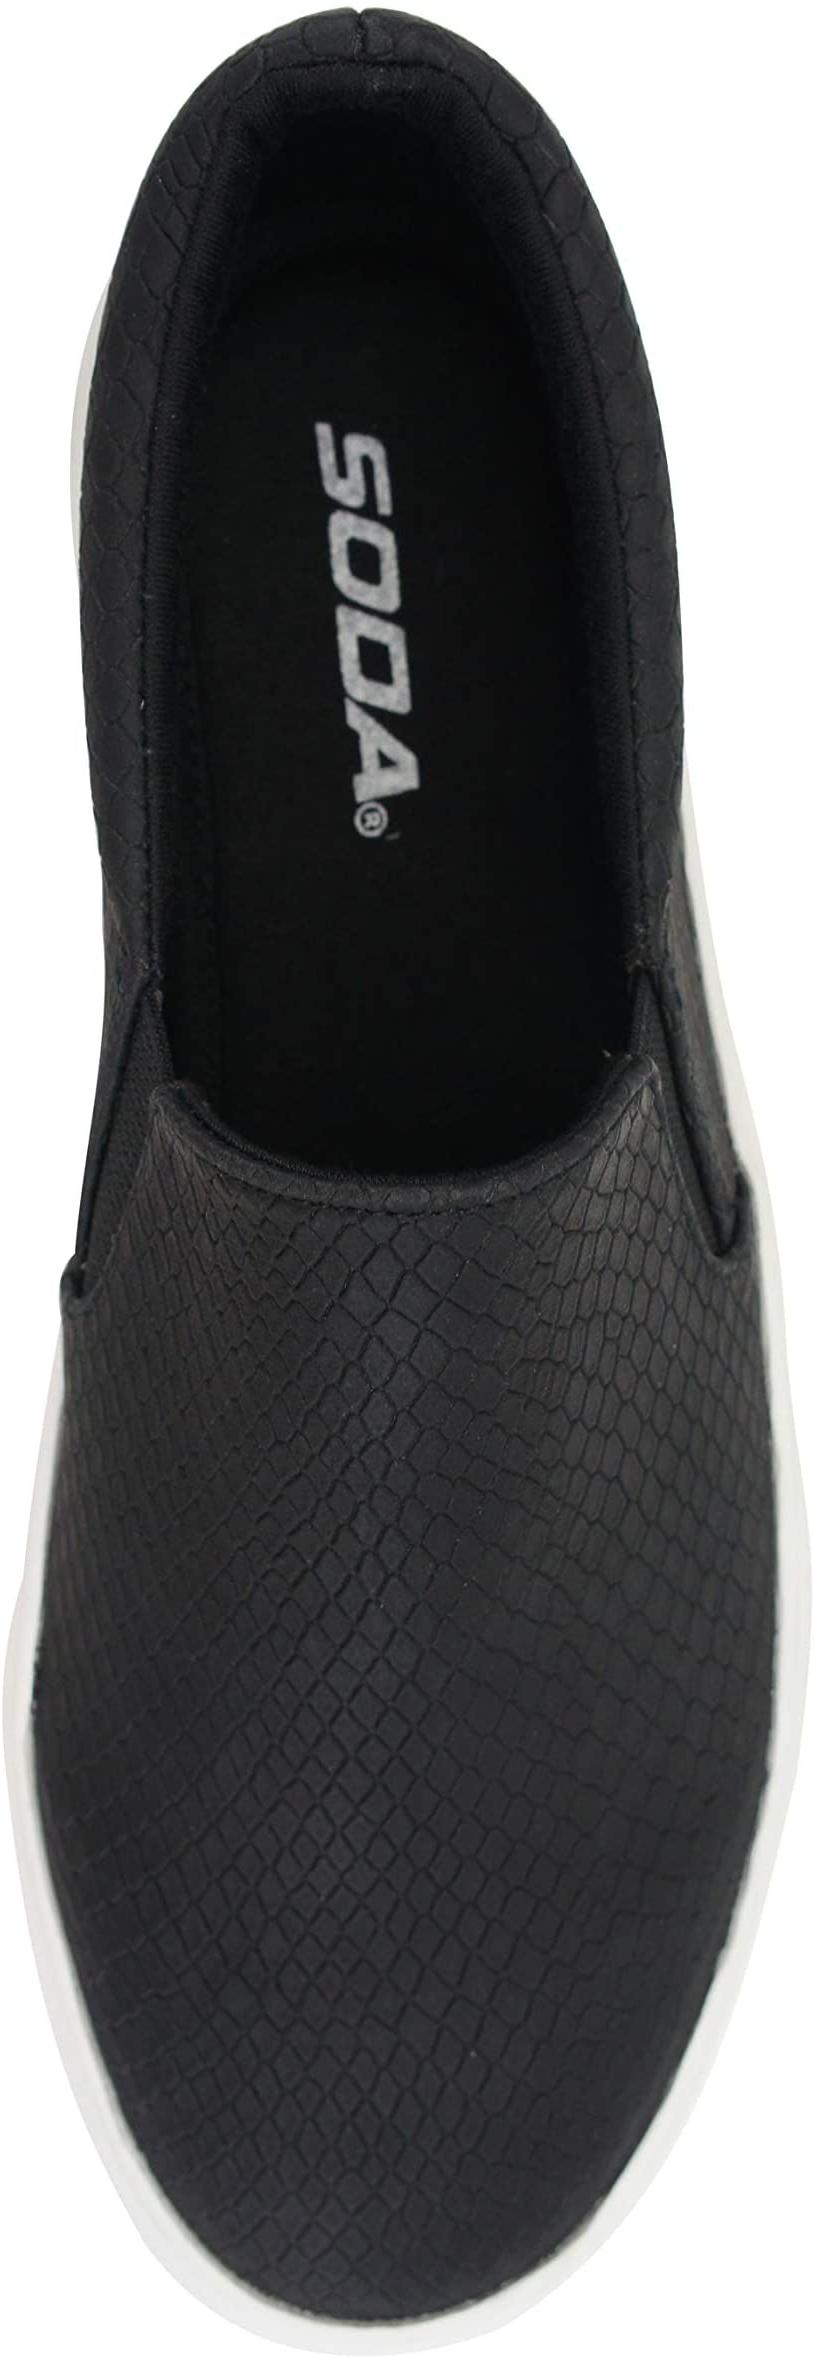 Soda Flat Women Shoes Slip On Loafers Casual Sneakers Memory Foam Insoles Hidden Platform / Flatform Round Toe HIKE-G PU Black Cobra Snake 6.5 - image 3 of 5